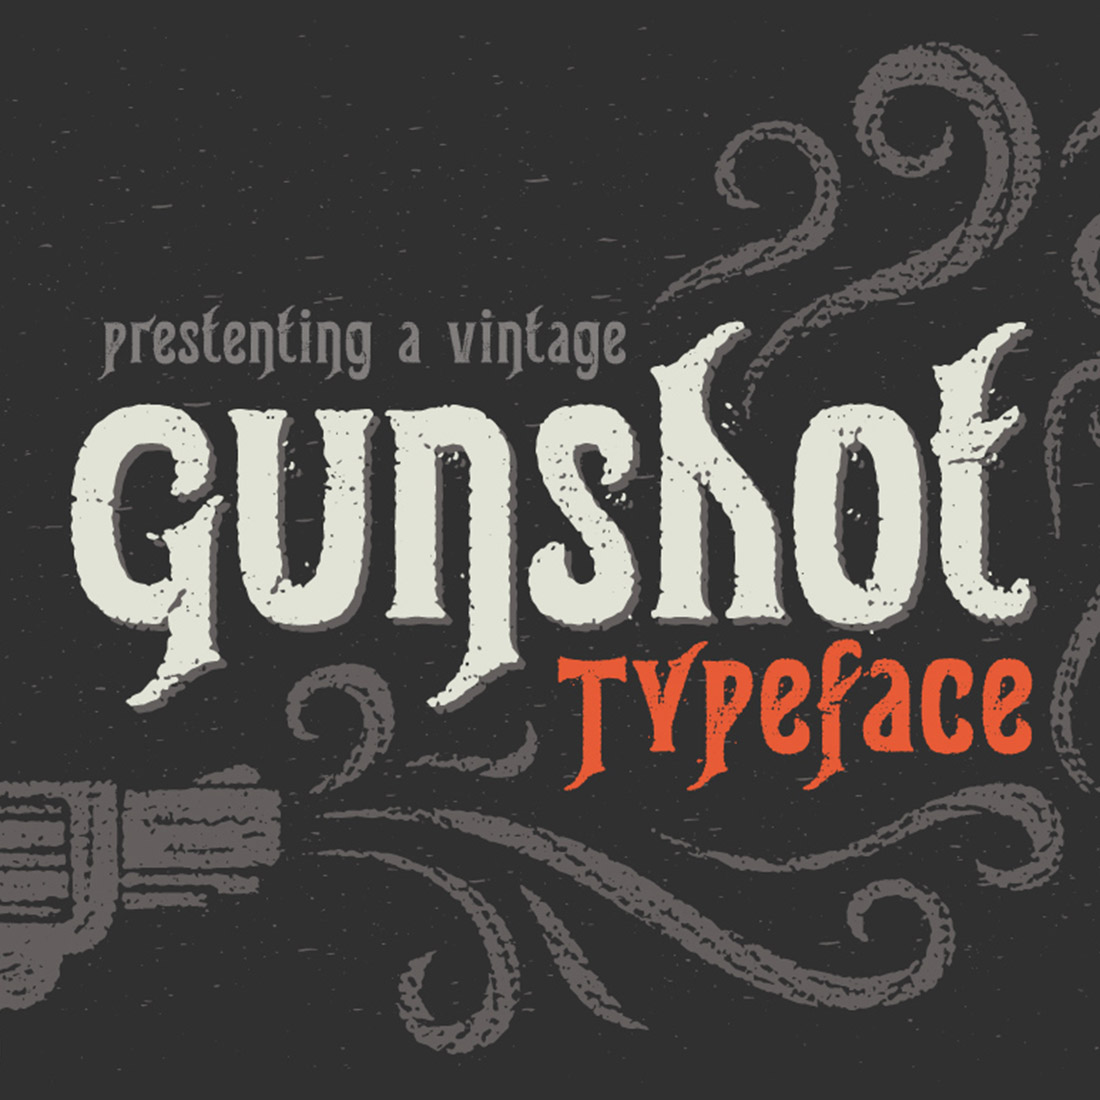 Gunshot Typeface main cover.